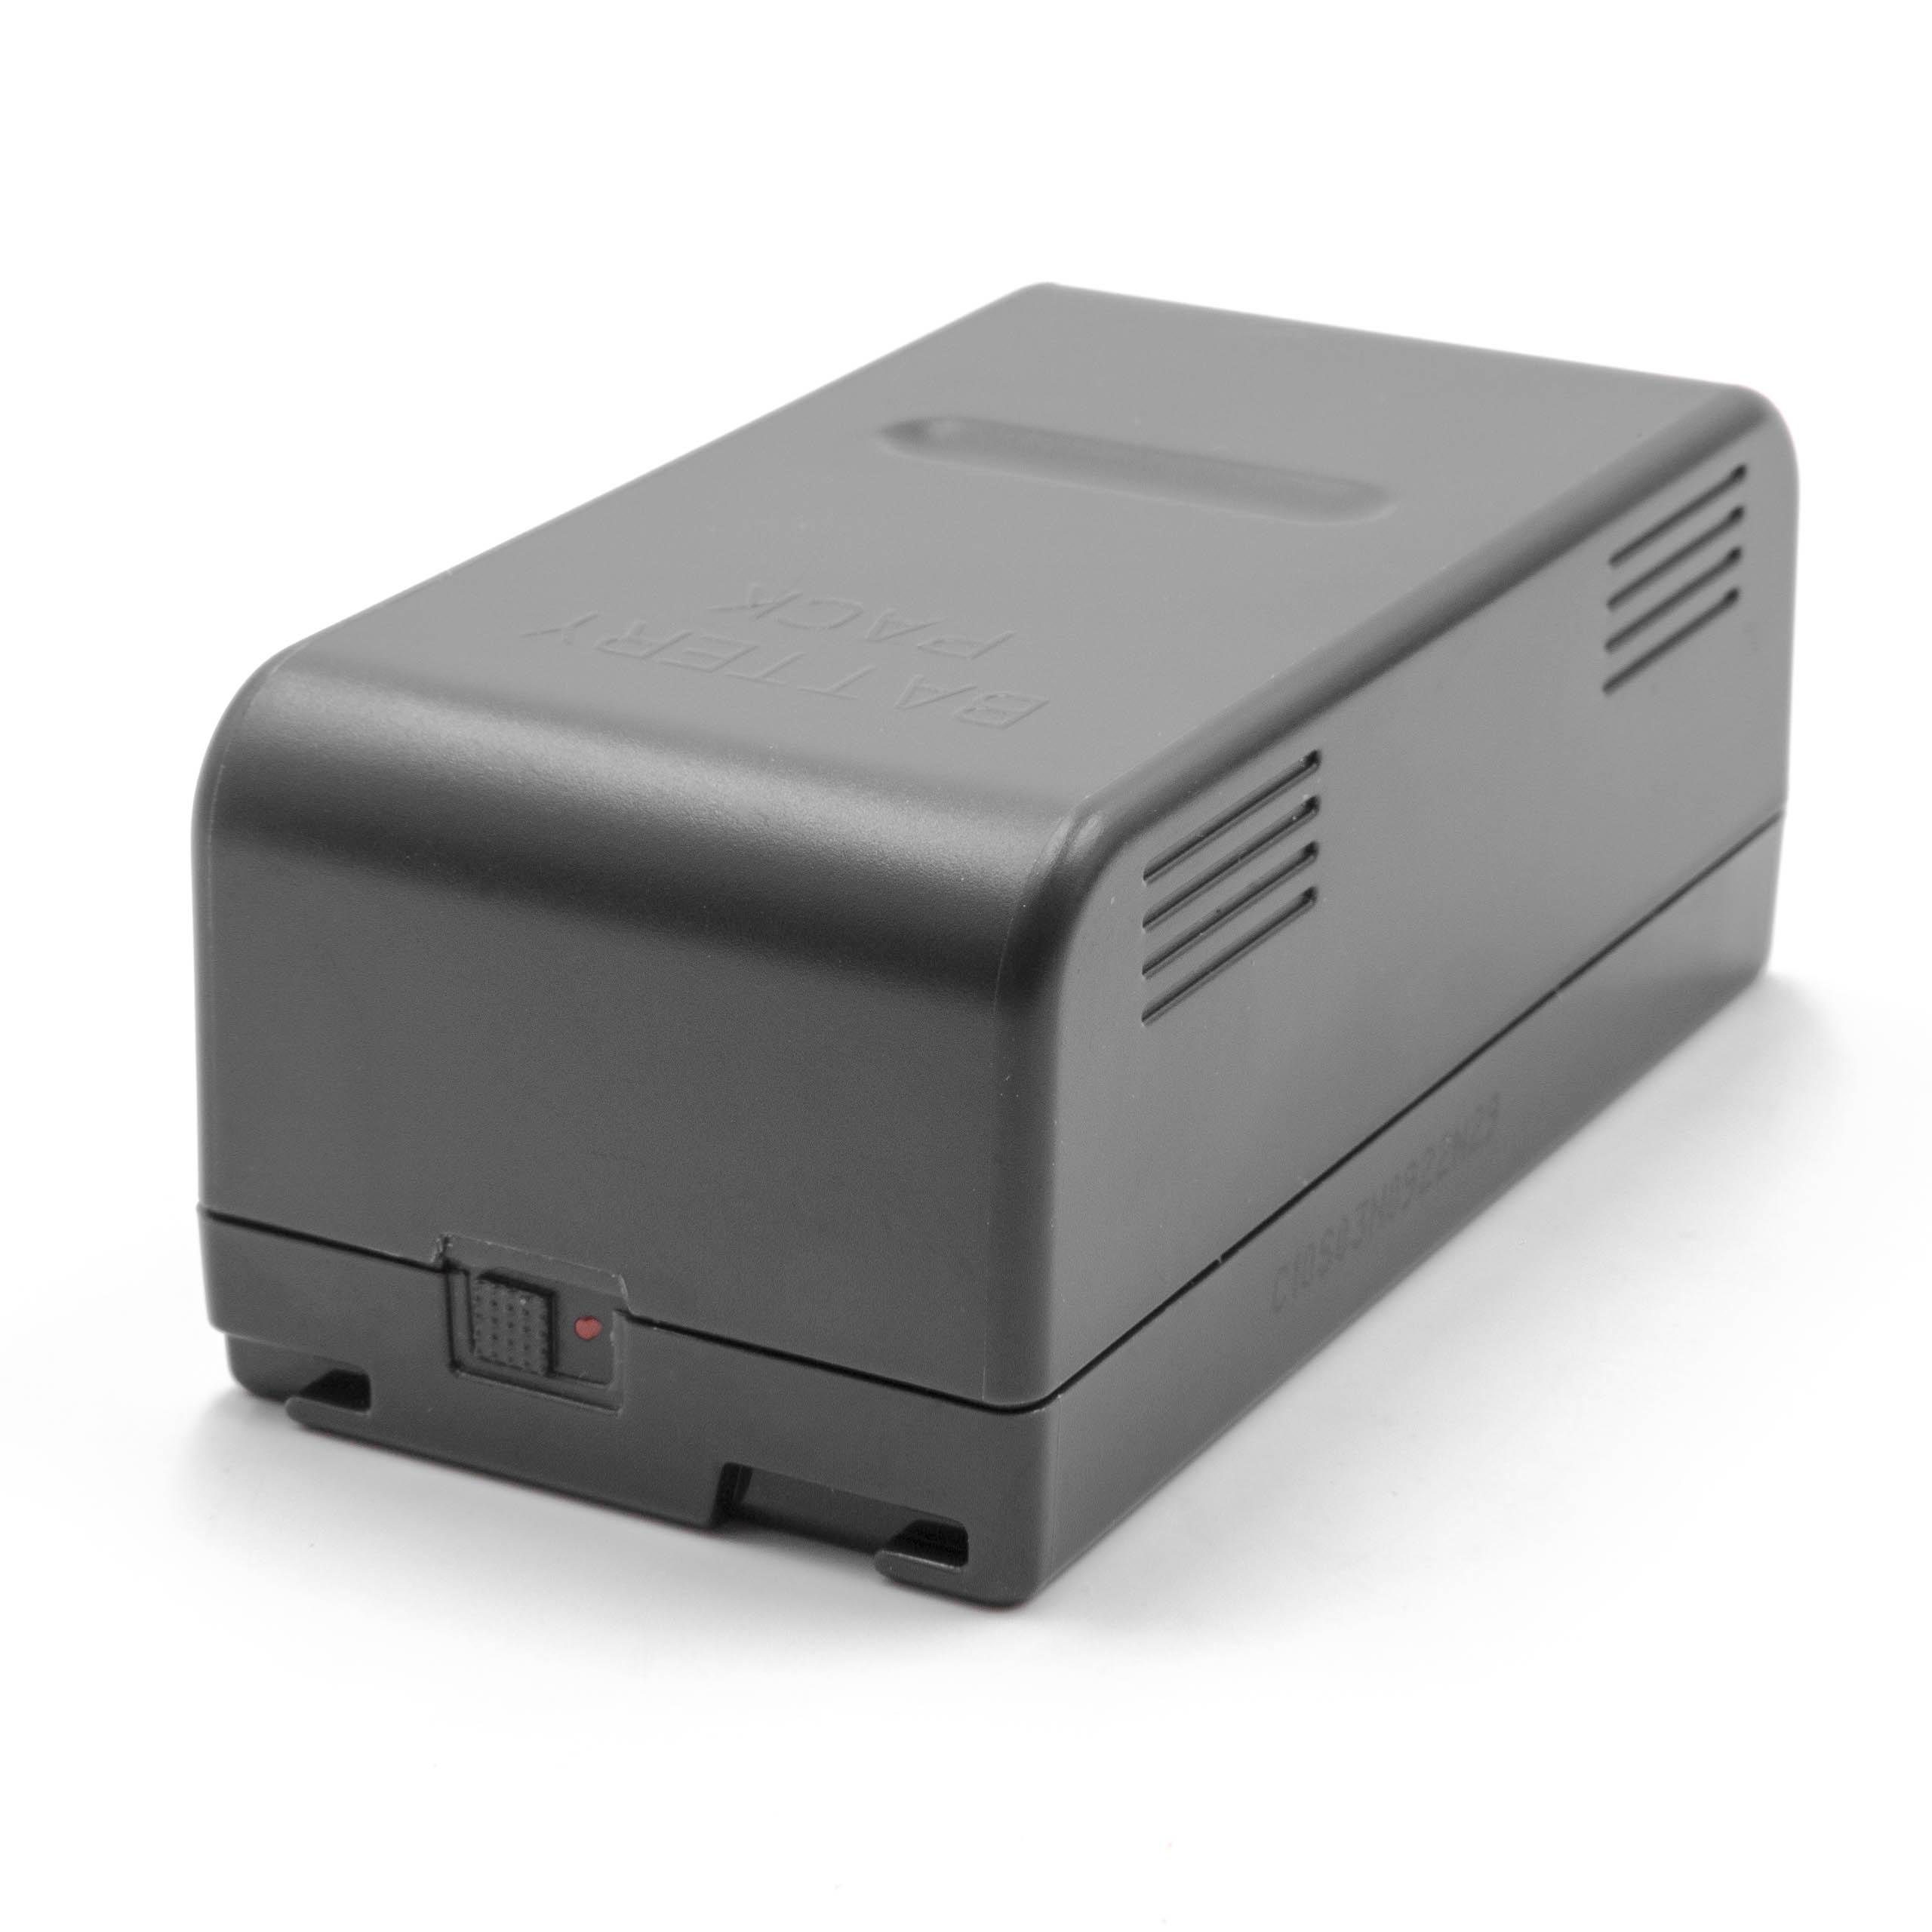 vhbw Kamera-Akku passend für Kompatibel mit RCA AutoShot CG-400, Pro-801C, Pro-808, Pro-808A, Pro-809, Pro-830, Pro-807 Kamera / Foto DSLR (4200mAh, 6V, NiMH) 4200 mAh